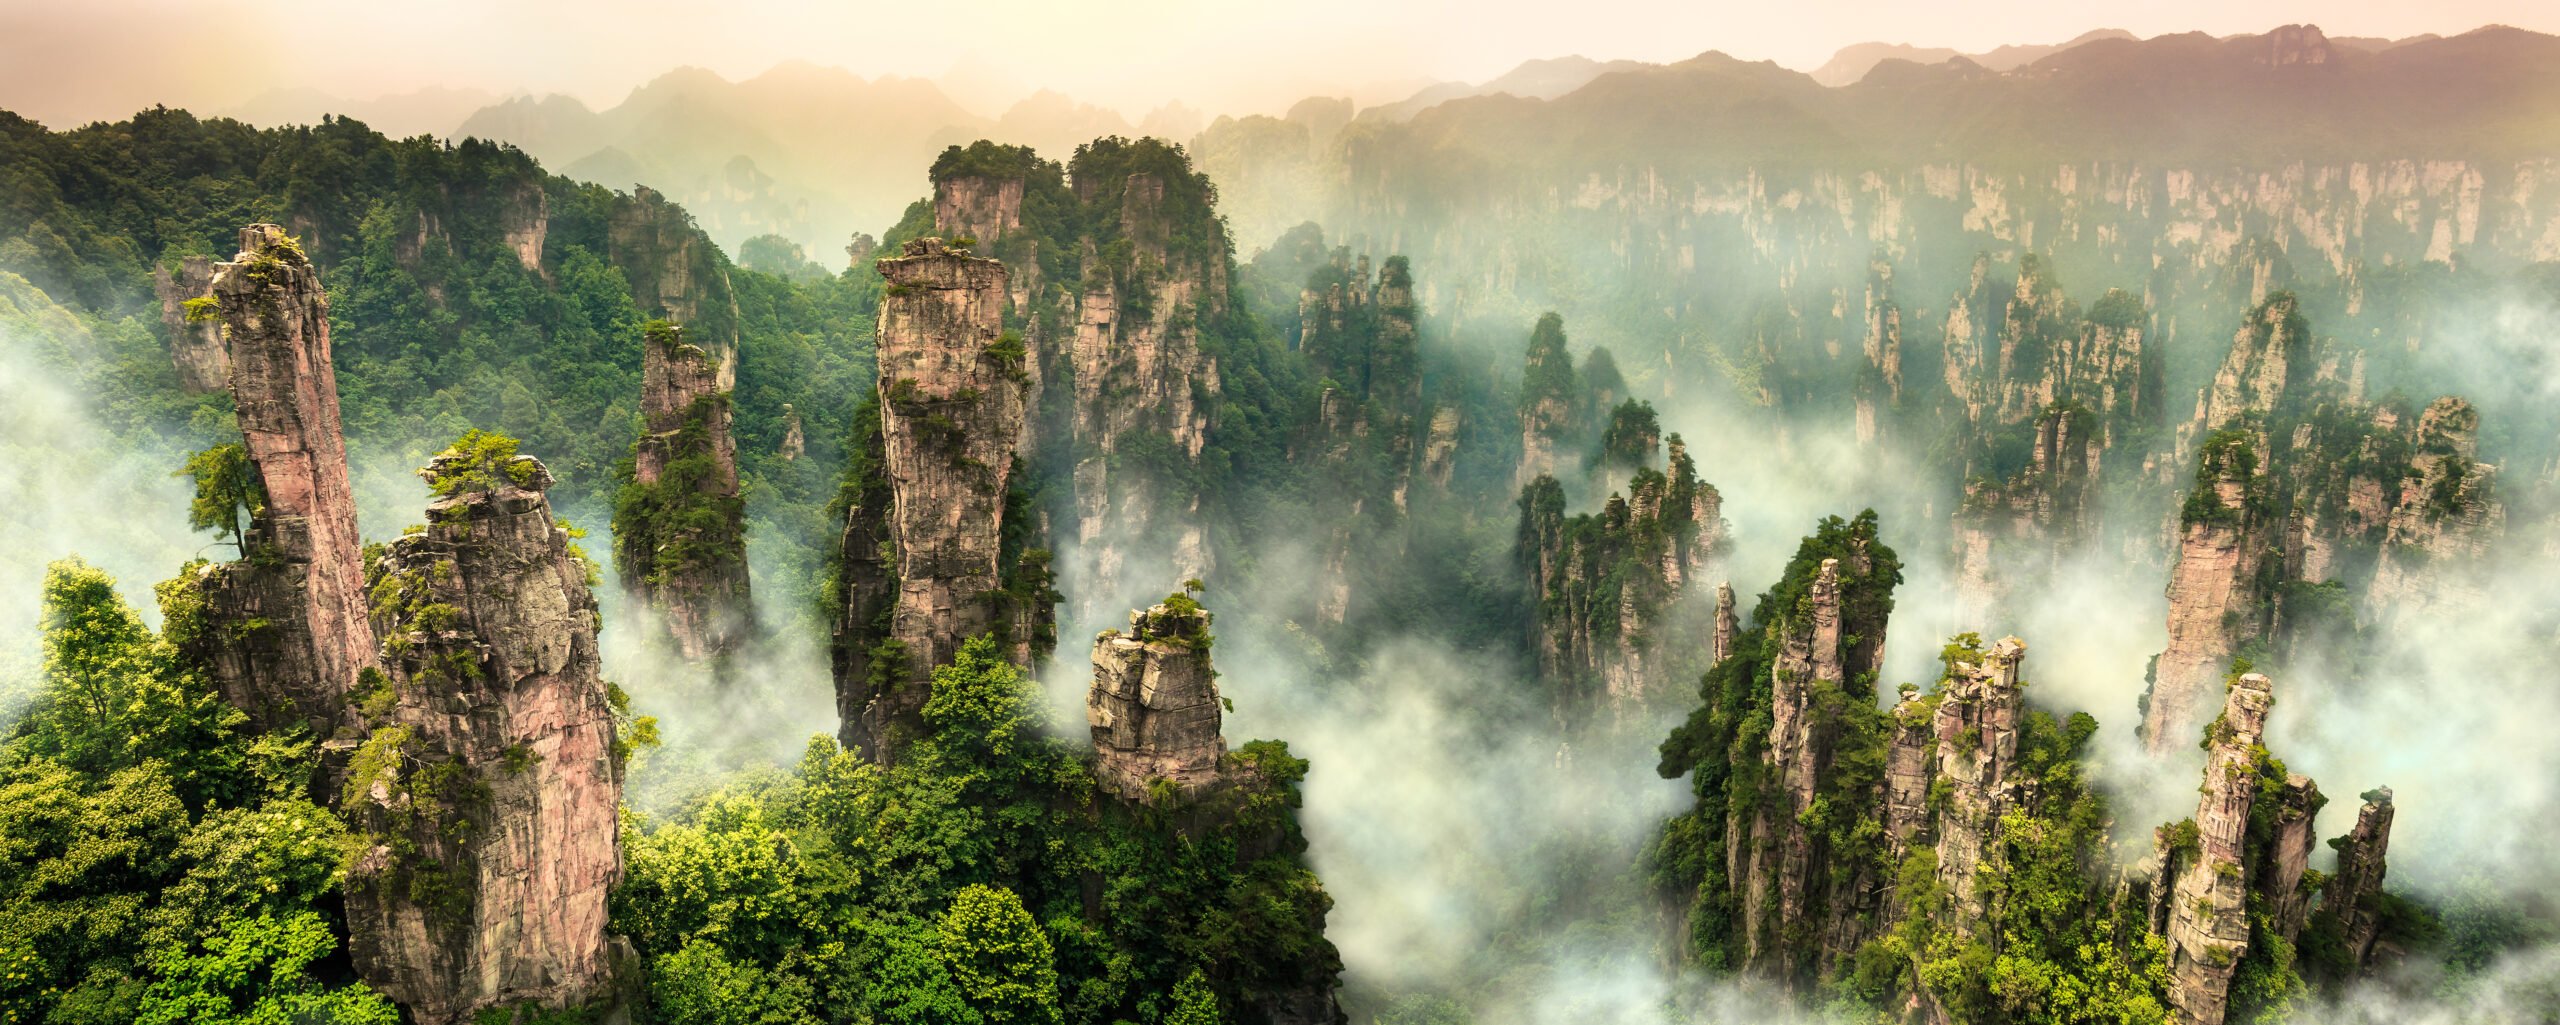 Parchi naturali attraggono turisti cinesi